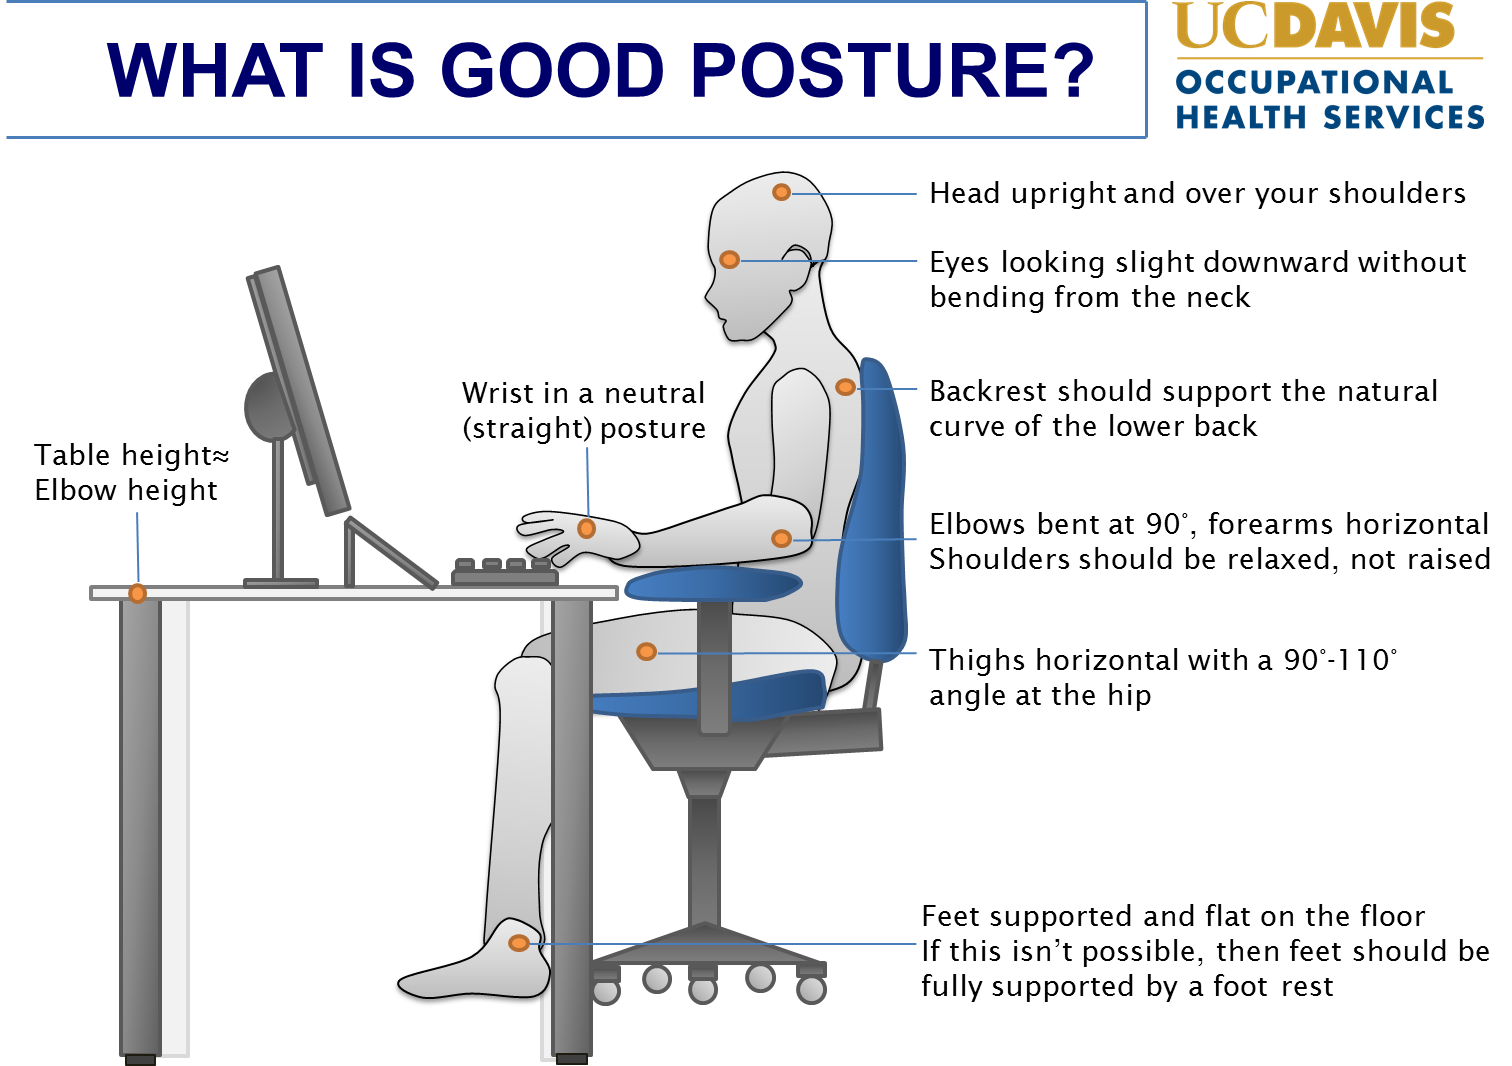 http://www.ucop.edu/risk-services/_images/ergo/correct-posture-p.png